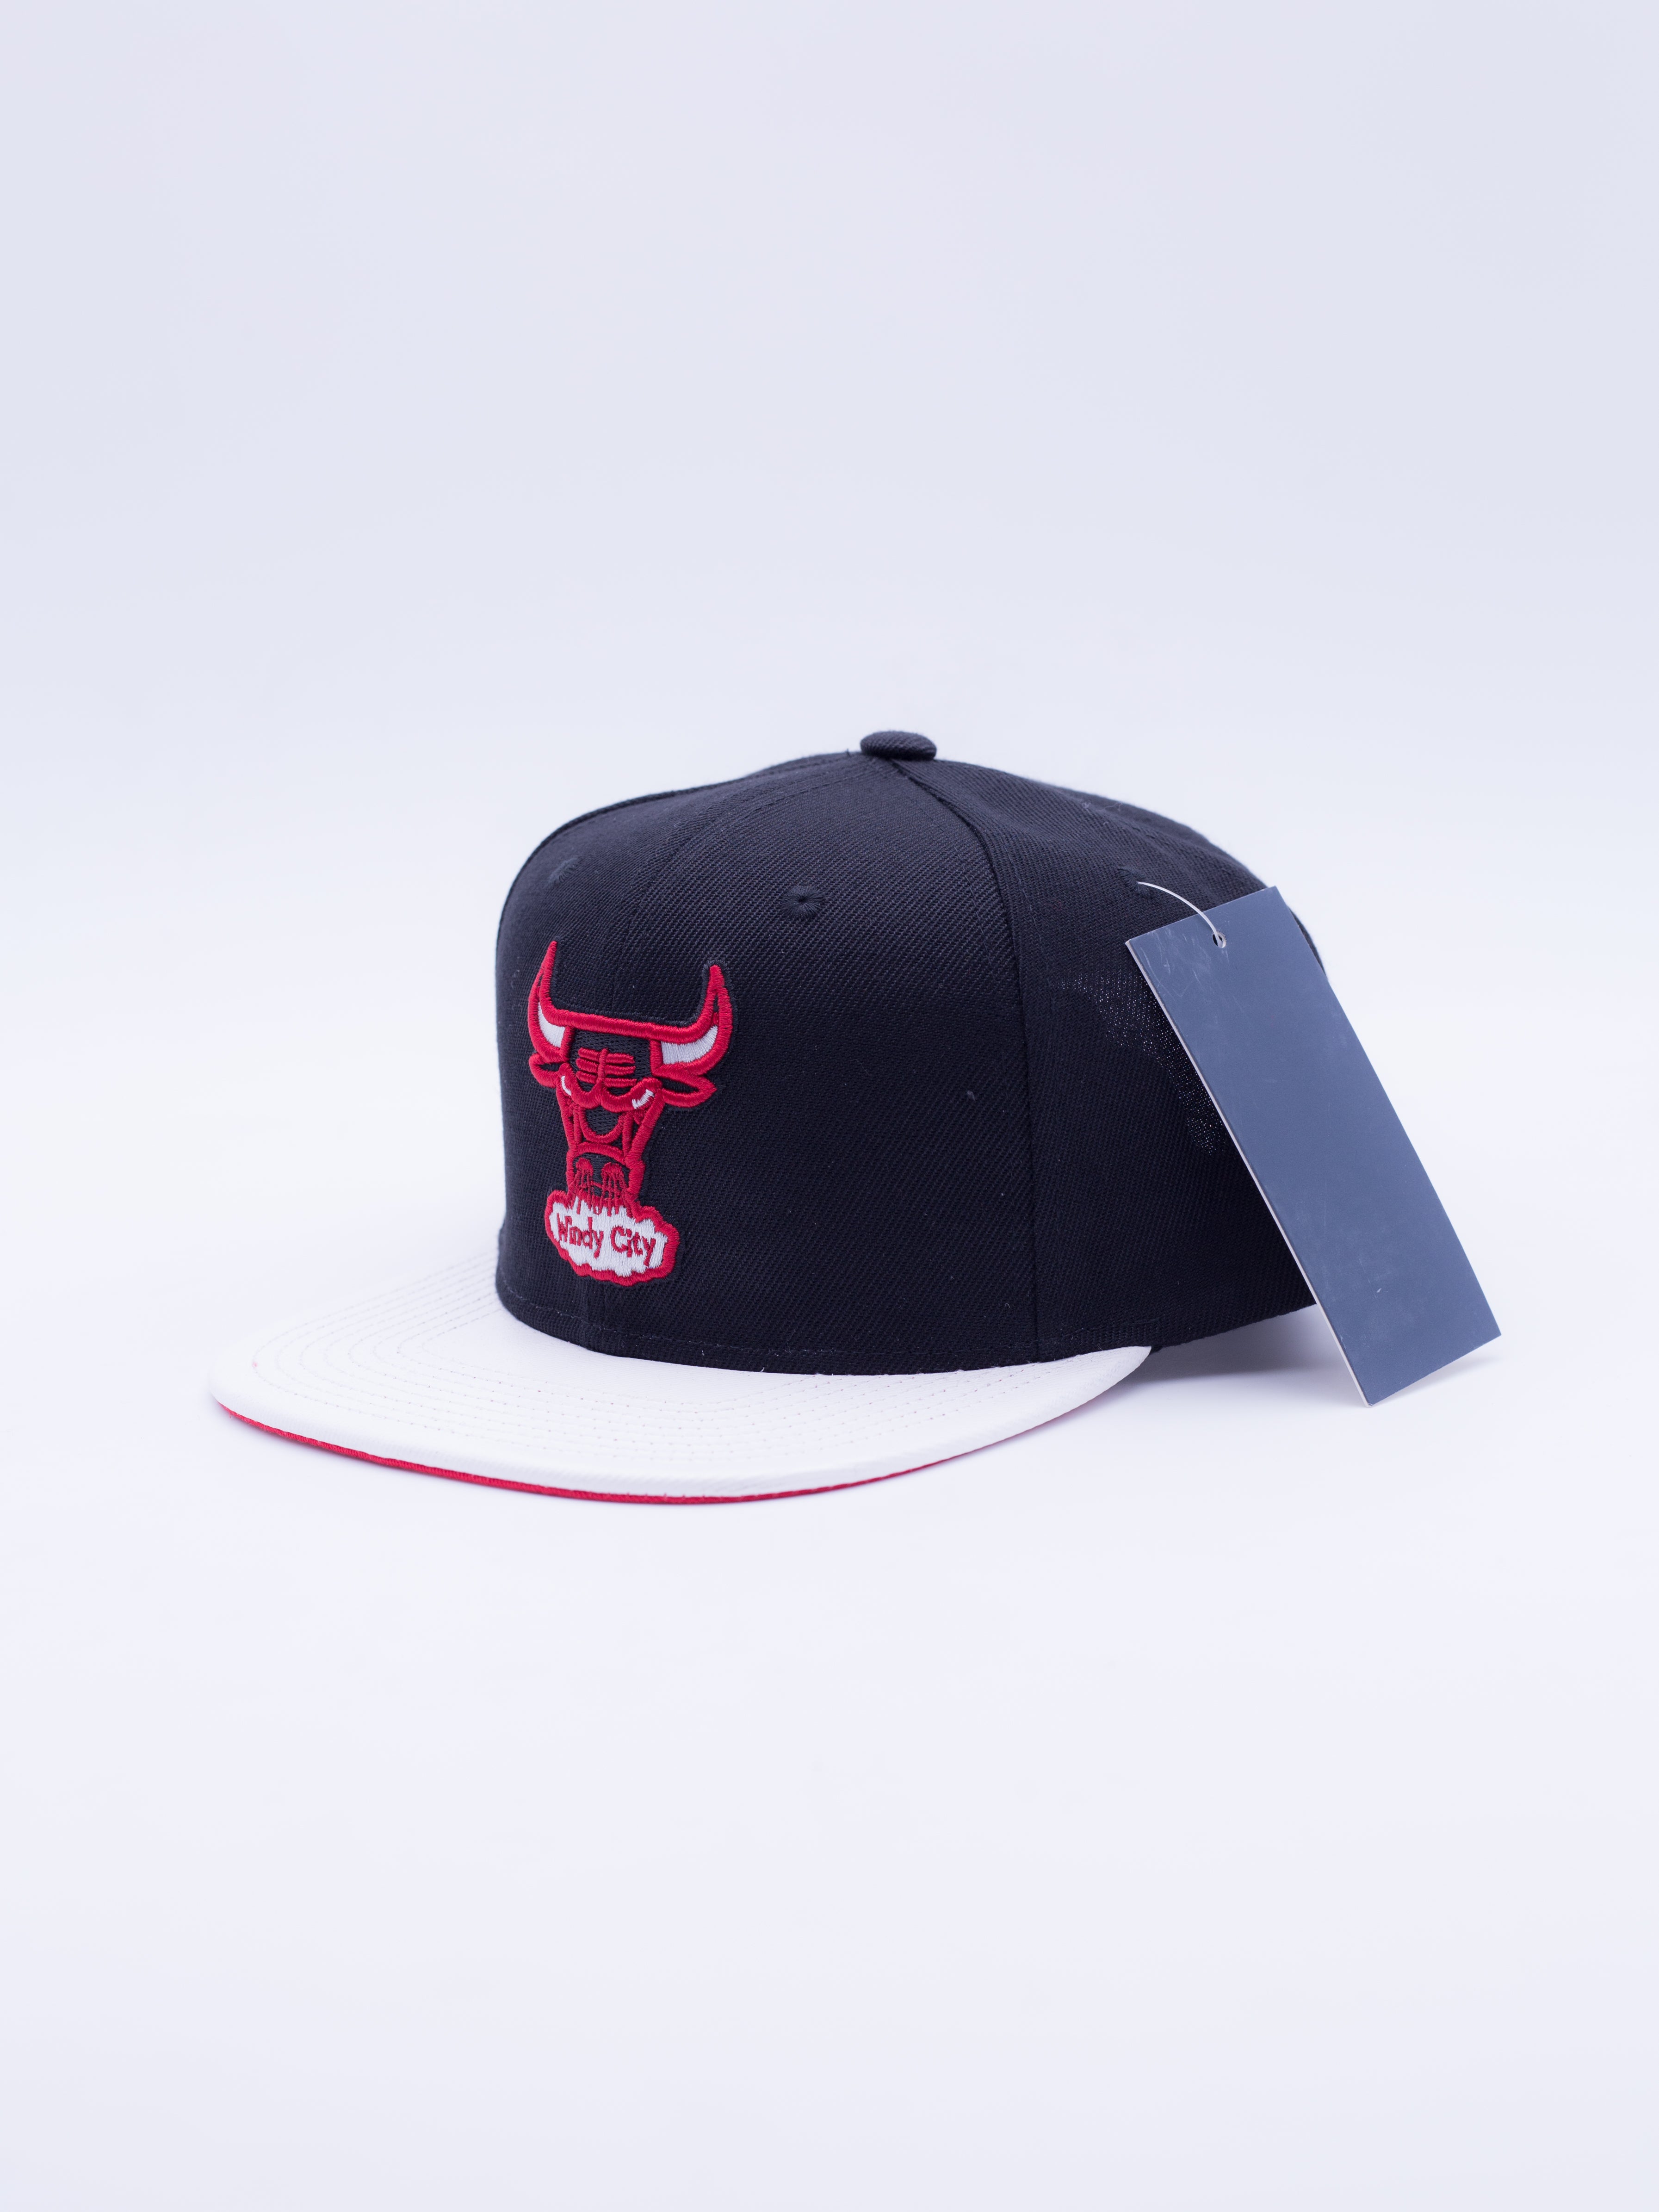 Chicago Bulls Snapback Black/Red/White - La Tienda de las Gorras